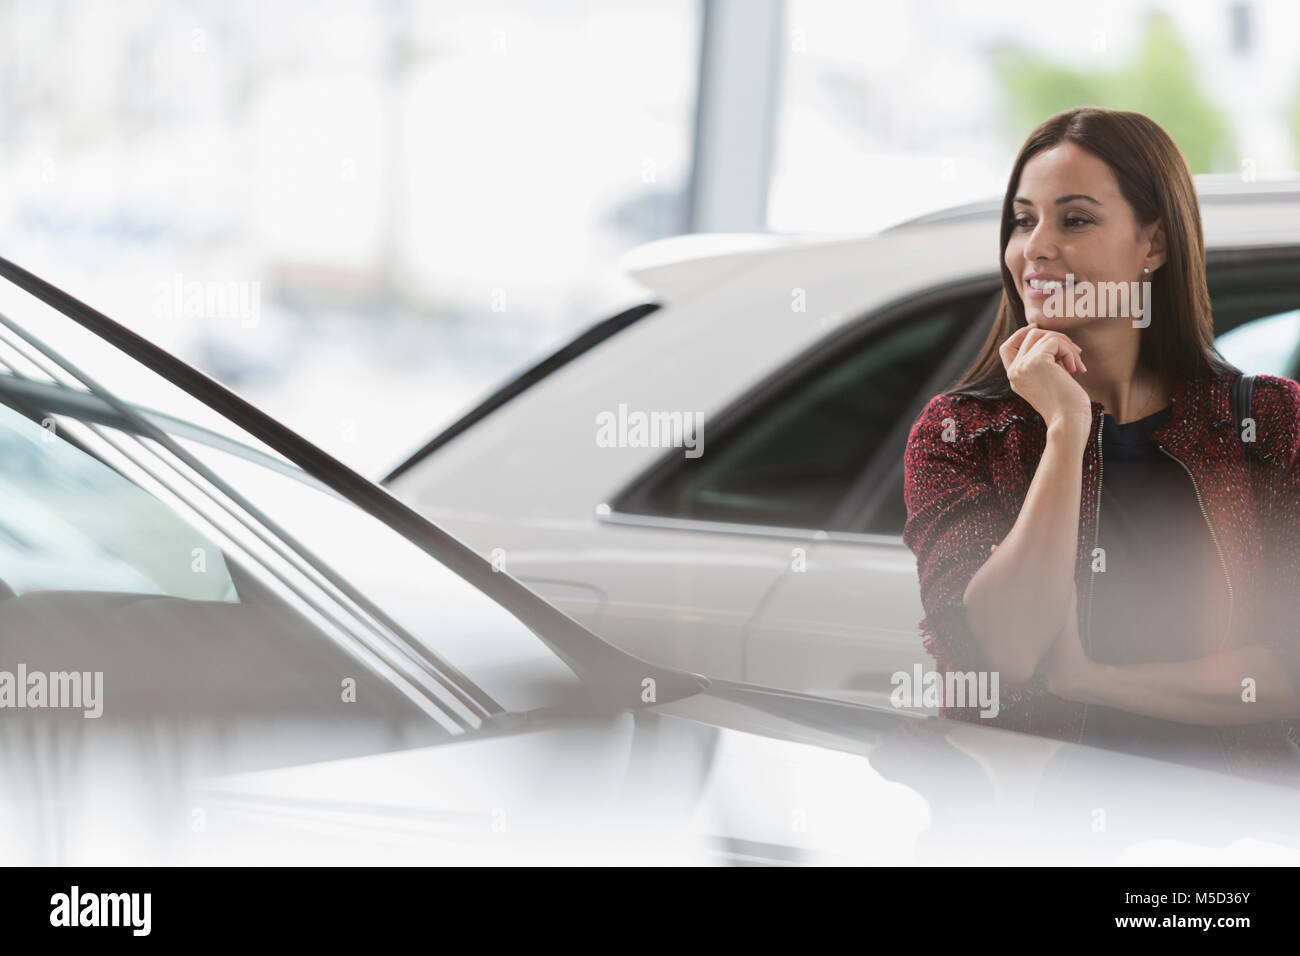 Smiling female customer eyeing new car in car dealership showroom Stock Photo